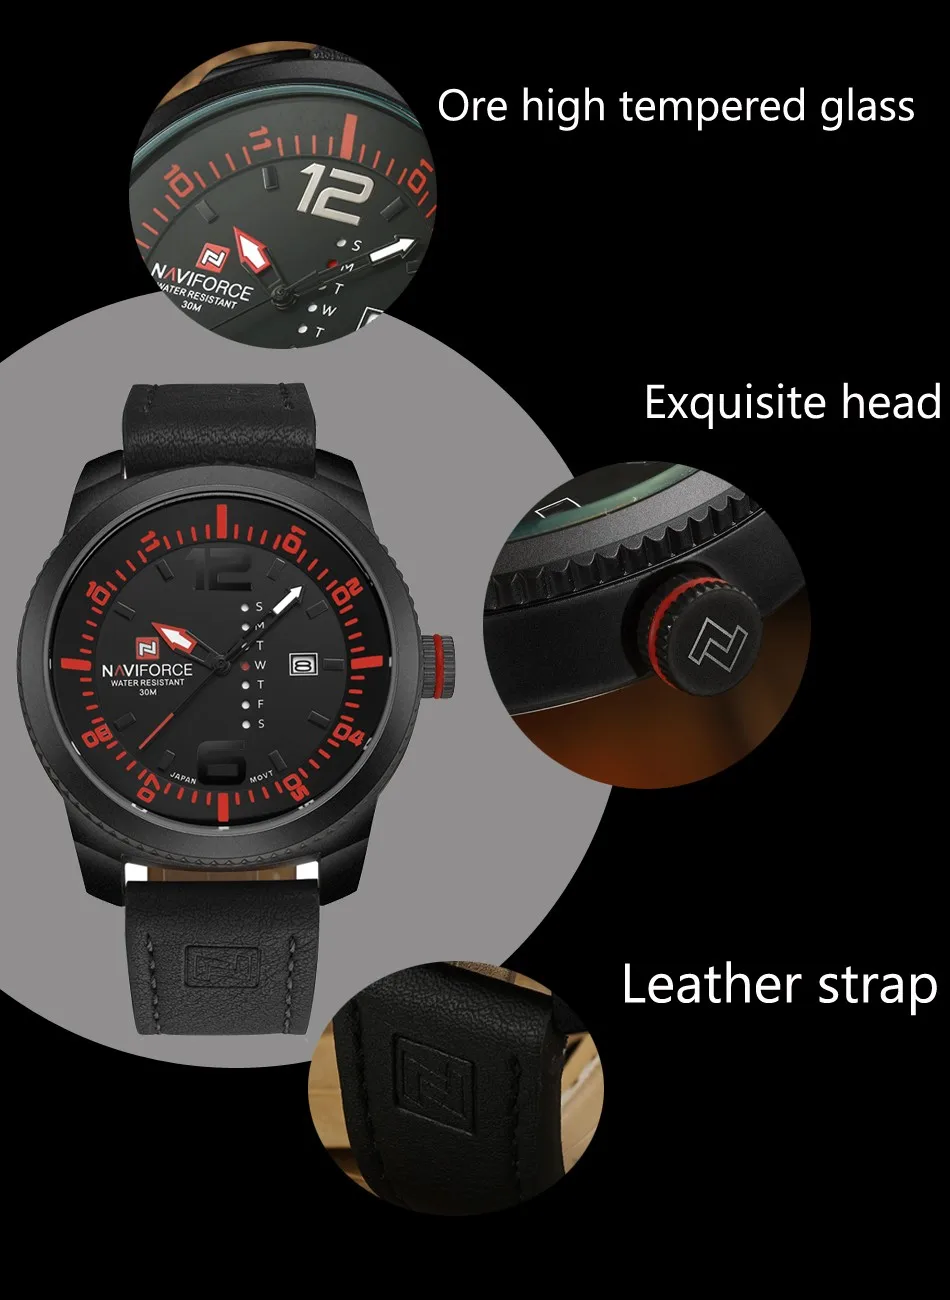 2019 Luxury Brand NAVIFORCE Date Quartz Watch Men Casual Military Sports Watches Leather Wristwatch Male Relogio Masculino Clock